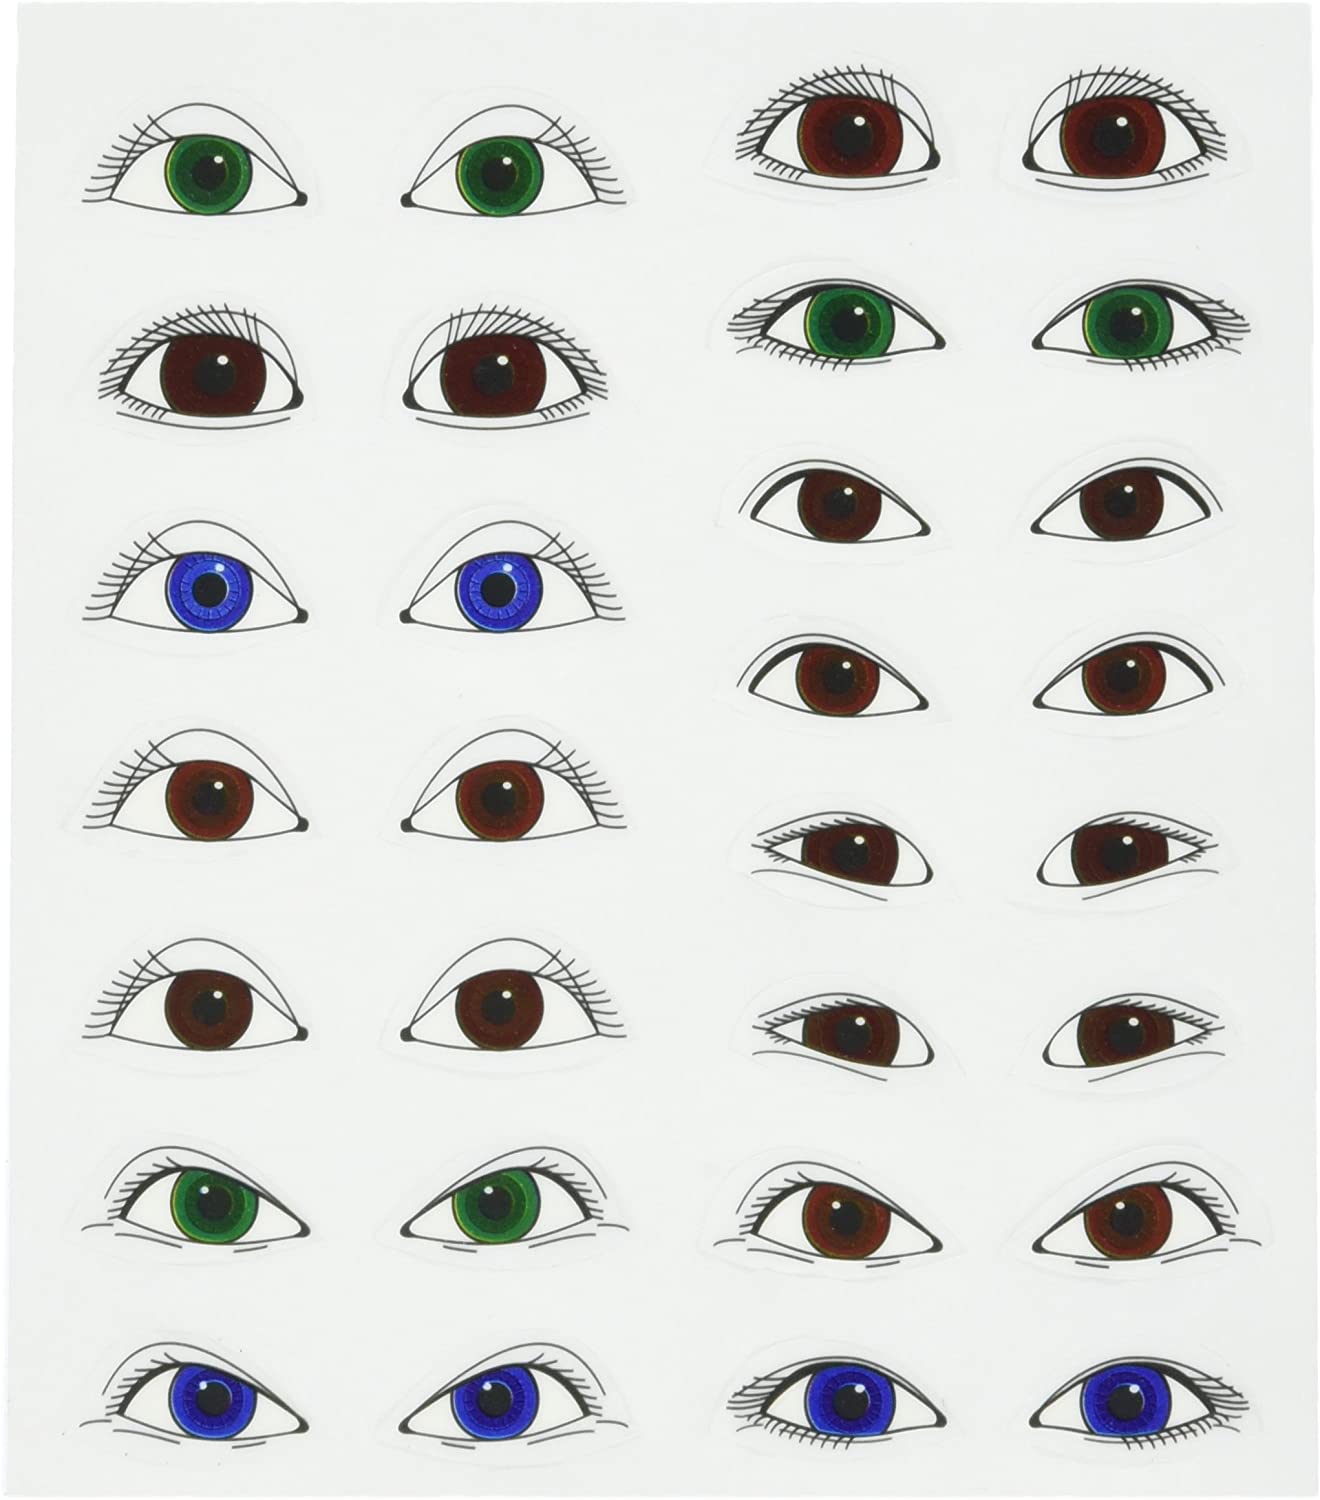 Eye Shaped Stickers That Help You Sleep At Work - Eyeball shaped stickers for eyelids - nap at work fake eyes